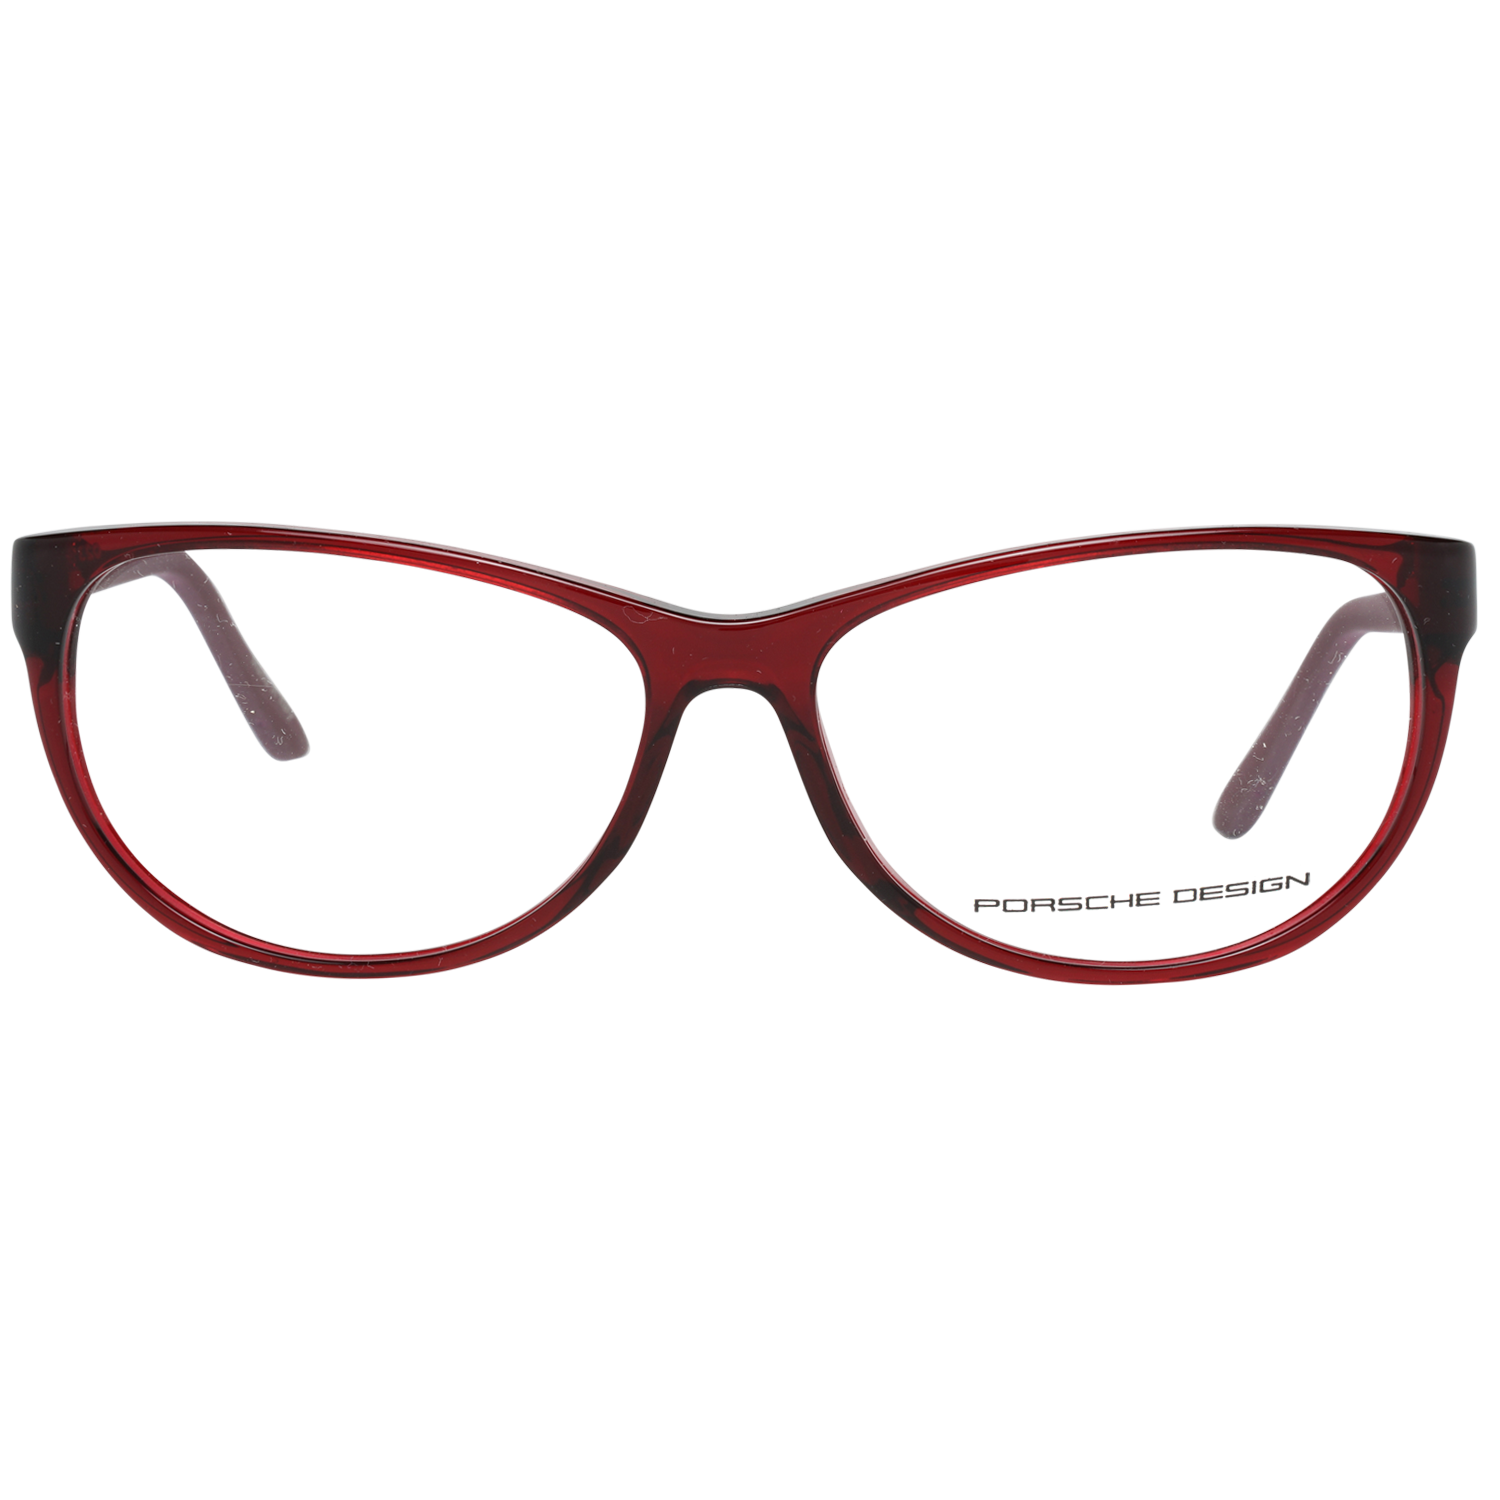 Porsche Design Eyeglasses Porsche Design Glasses Frames P8246 C 56 Eyeglasses Eyewear UK USA Australia 